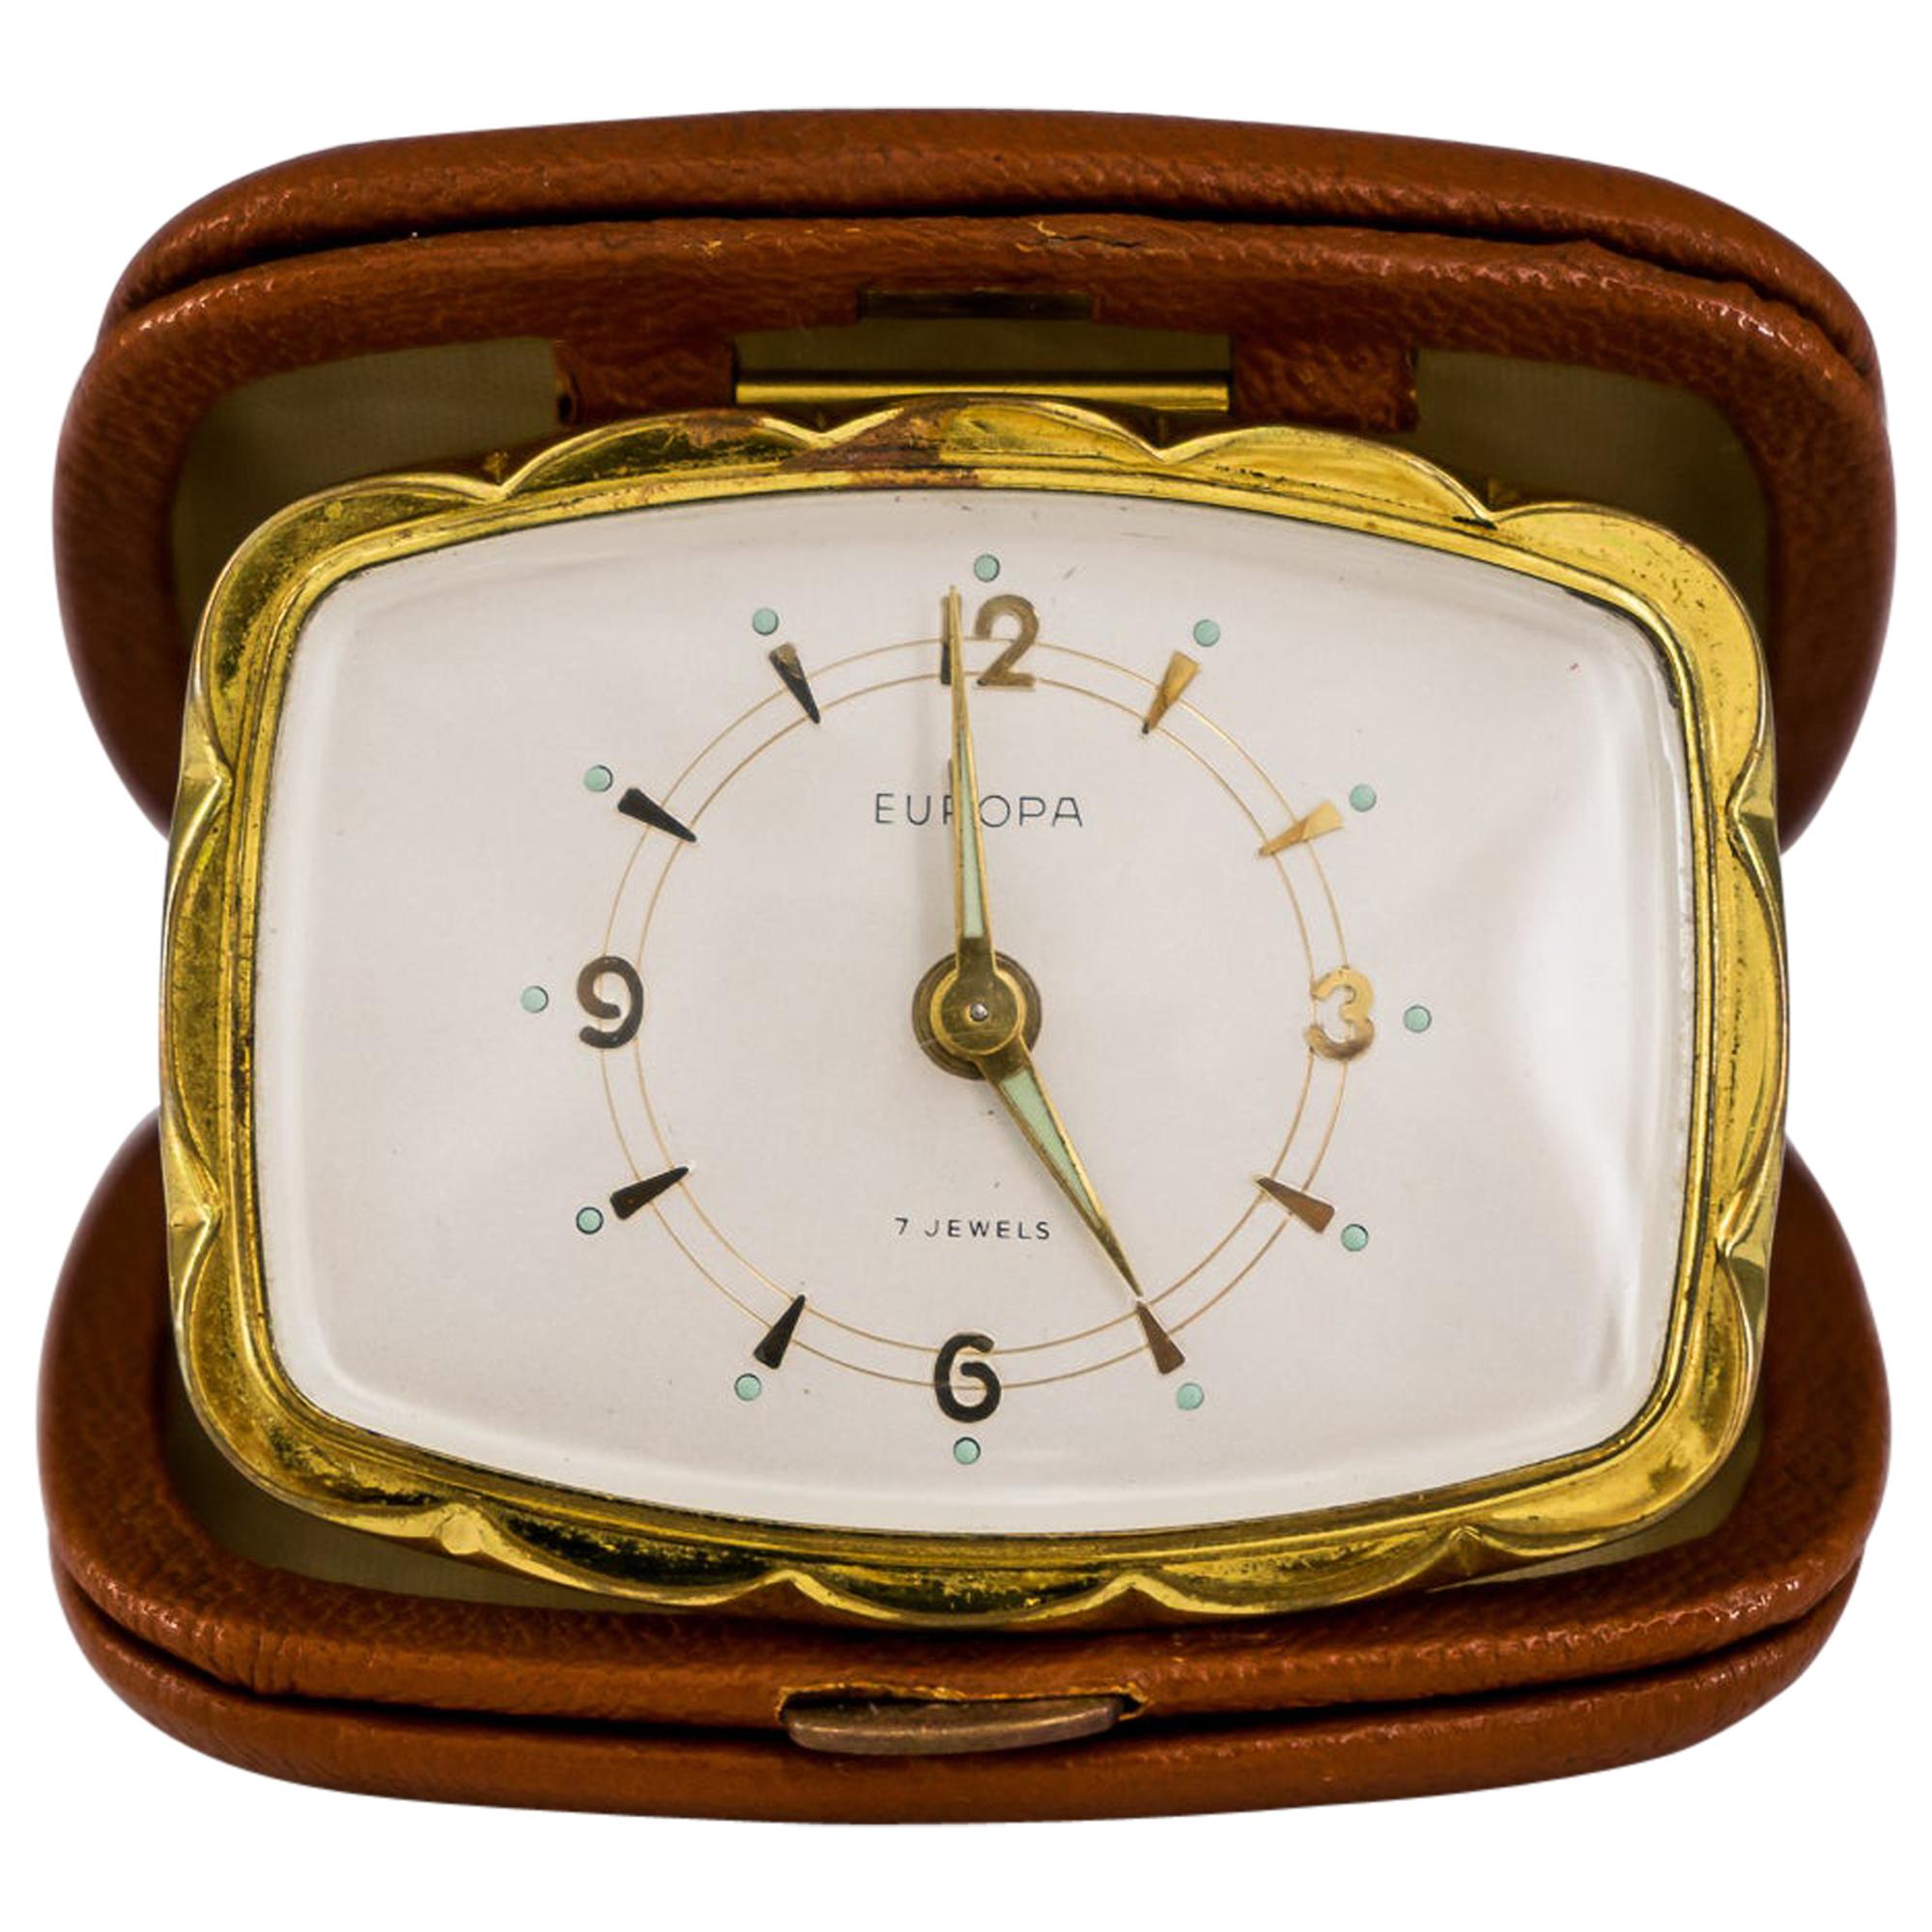 Travel Alarm Clock "Europe", 1950s